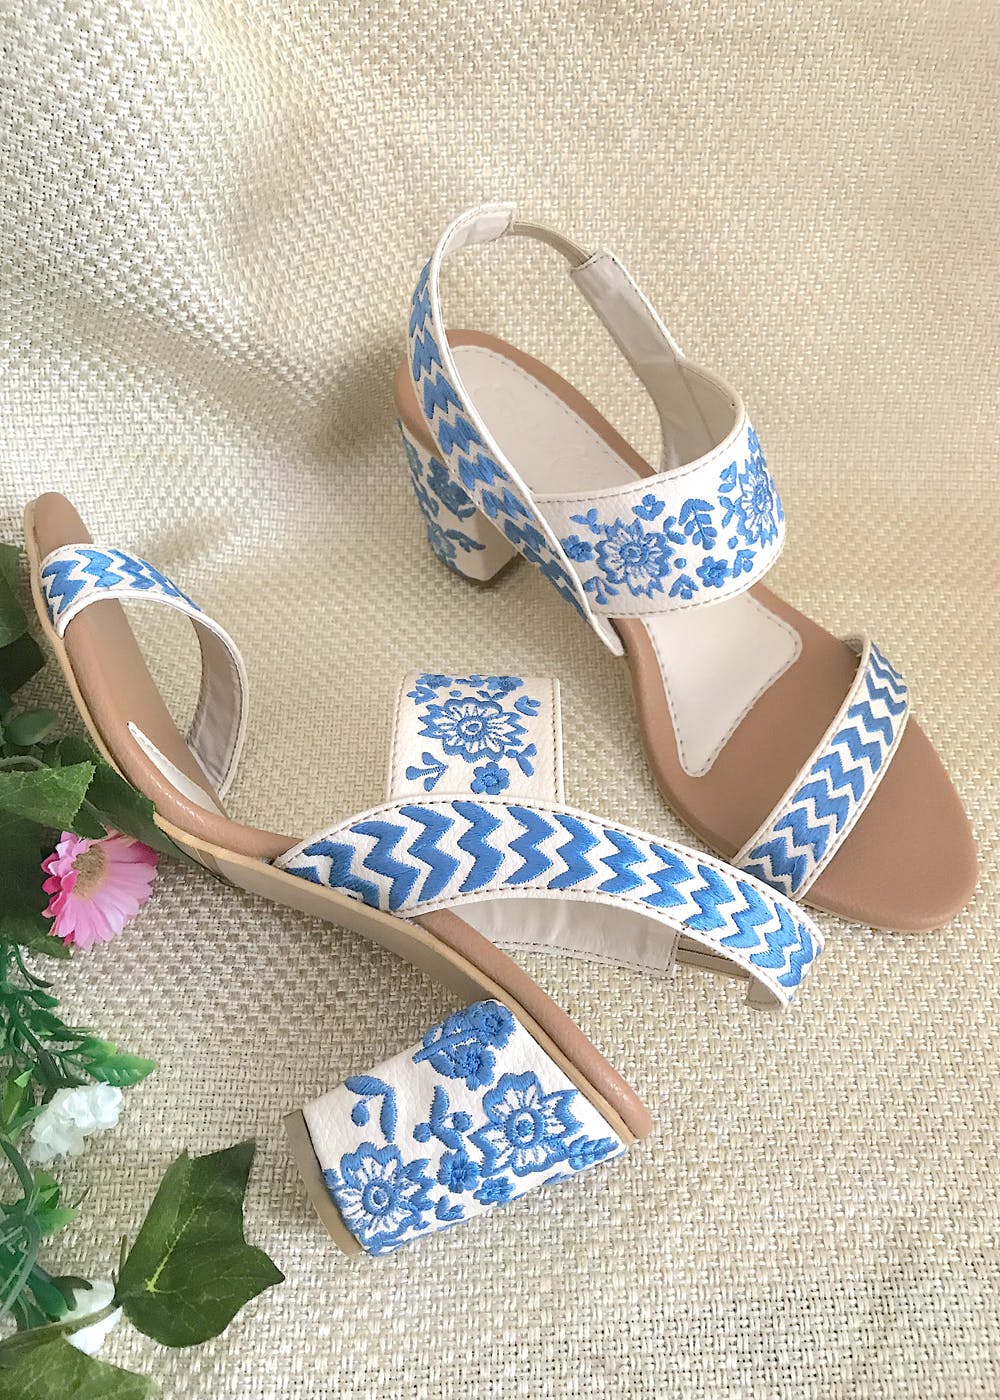 Joy & Peace Open Toe Cream Pink Sandals Size 35 EU 5 US Slingback Heels  Shoes | eBay